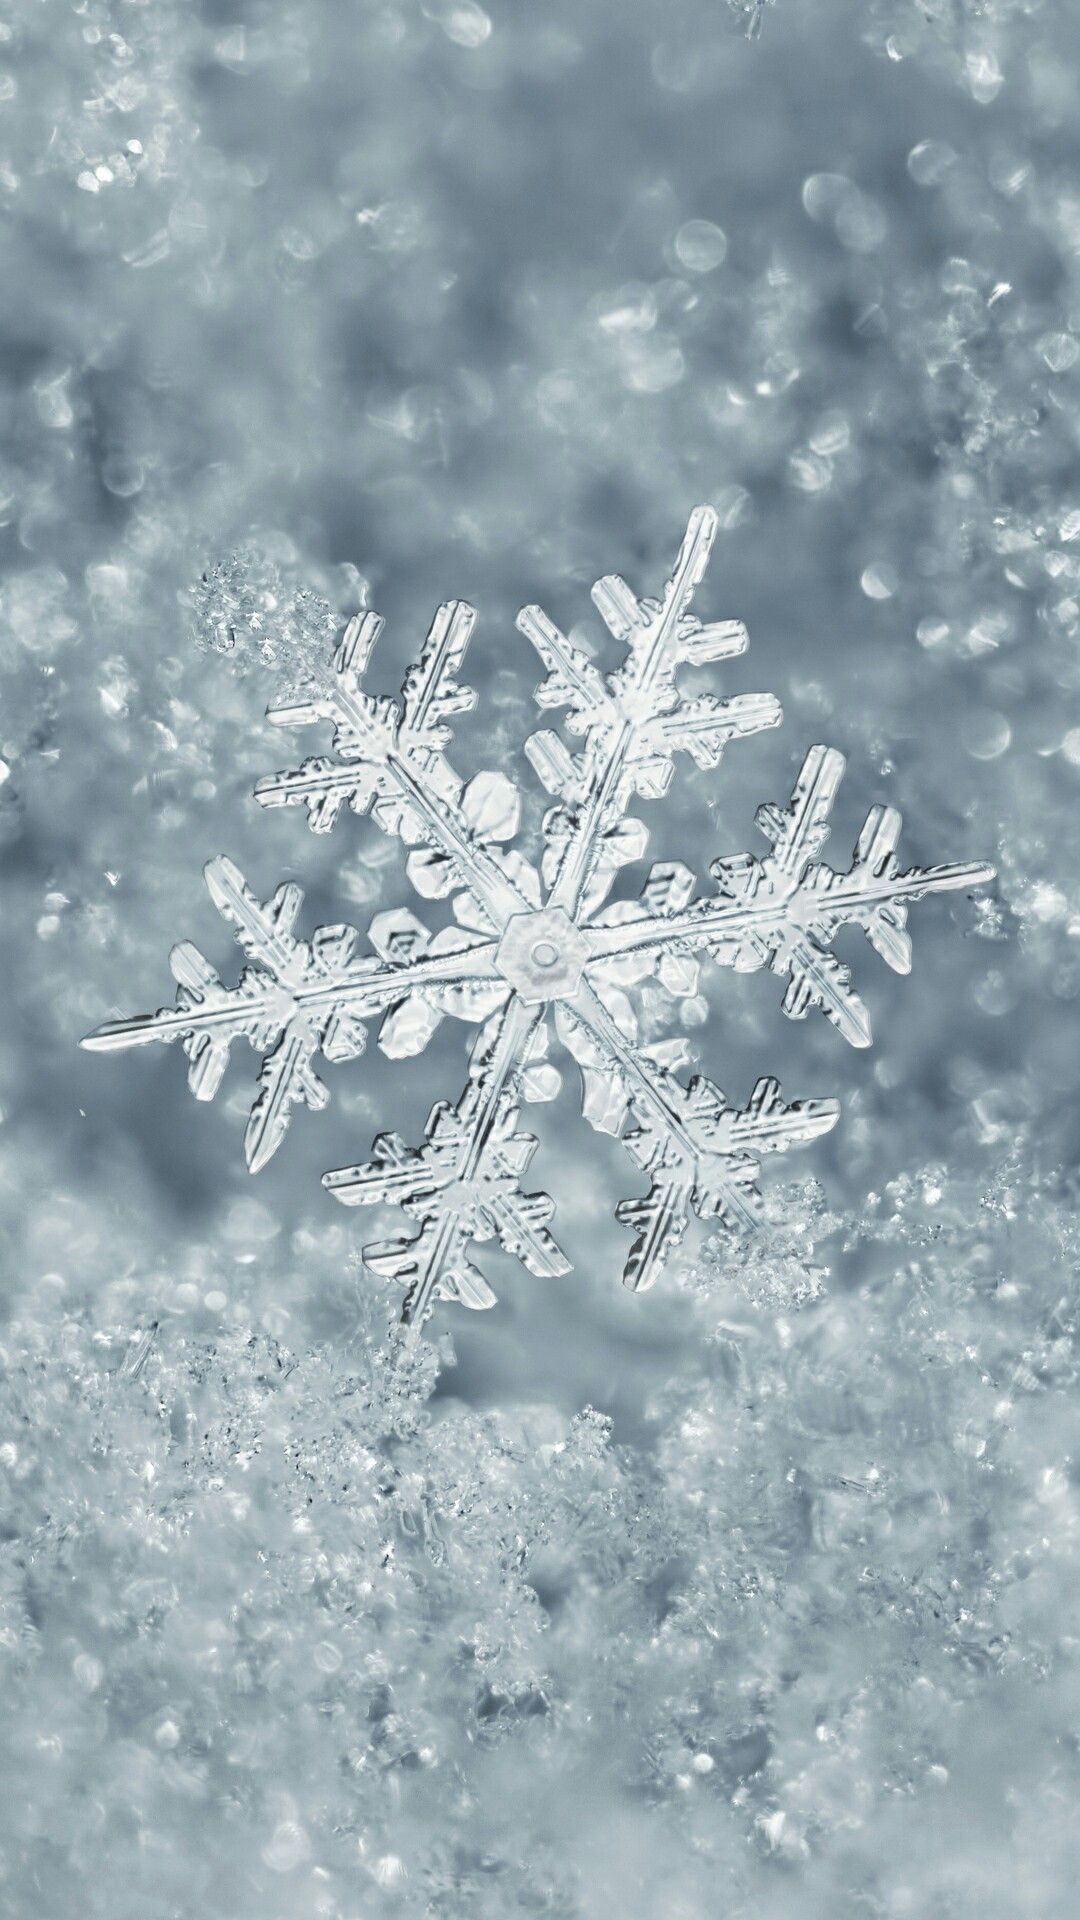 Snowflake Wallpaper Lock Screen Background. IPhone Wallpaper Winter, Winter Wallpaper, Snowflake Wallpaper